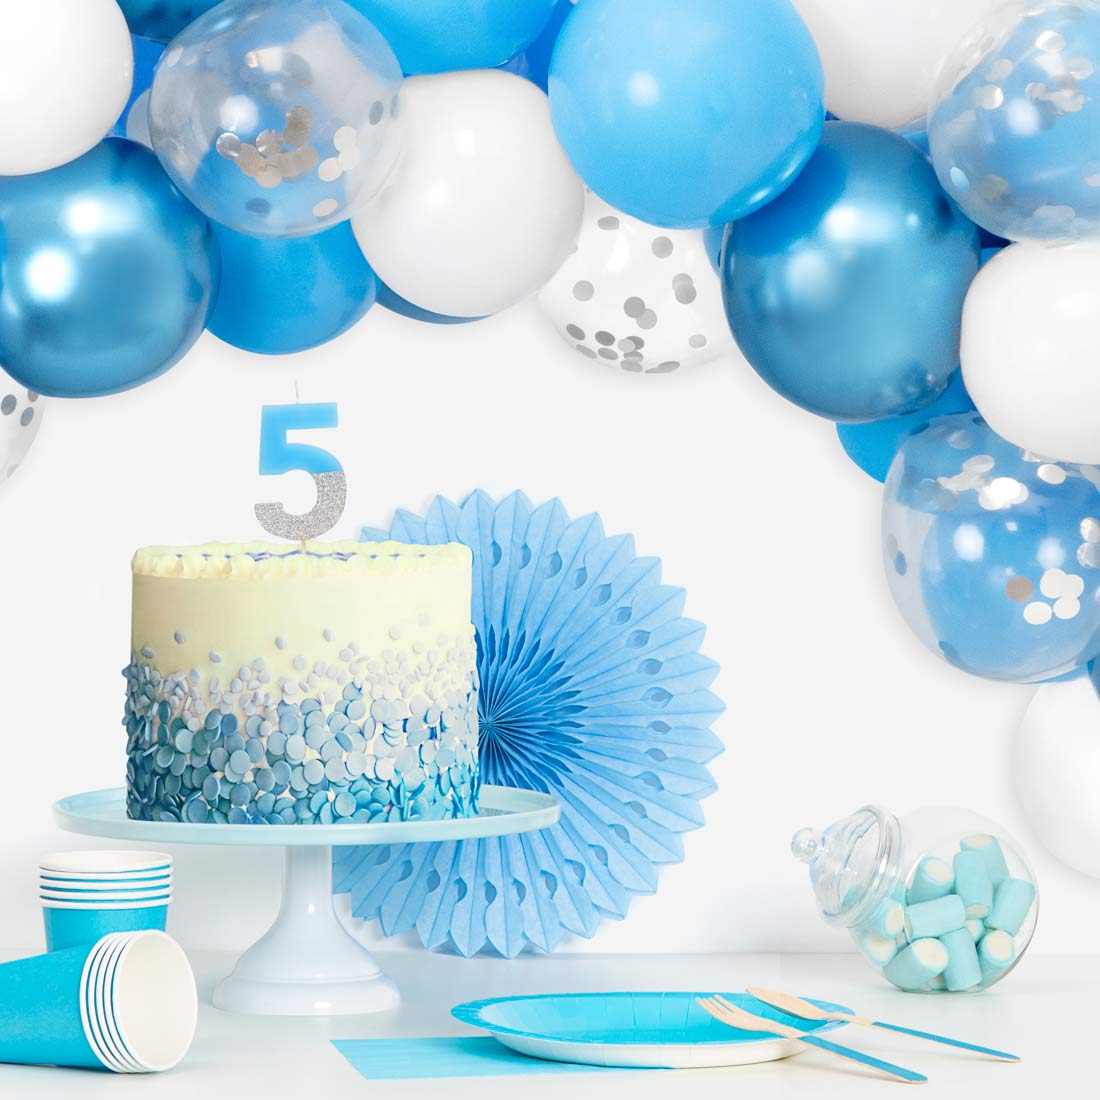 Bleu, blanc, bleu métallique et ballon transparent avec confettis